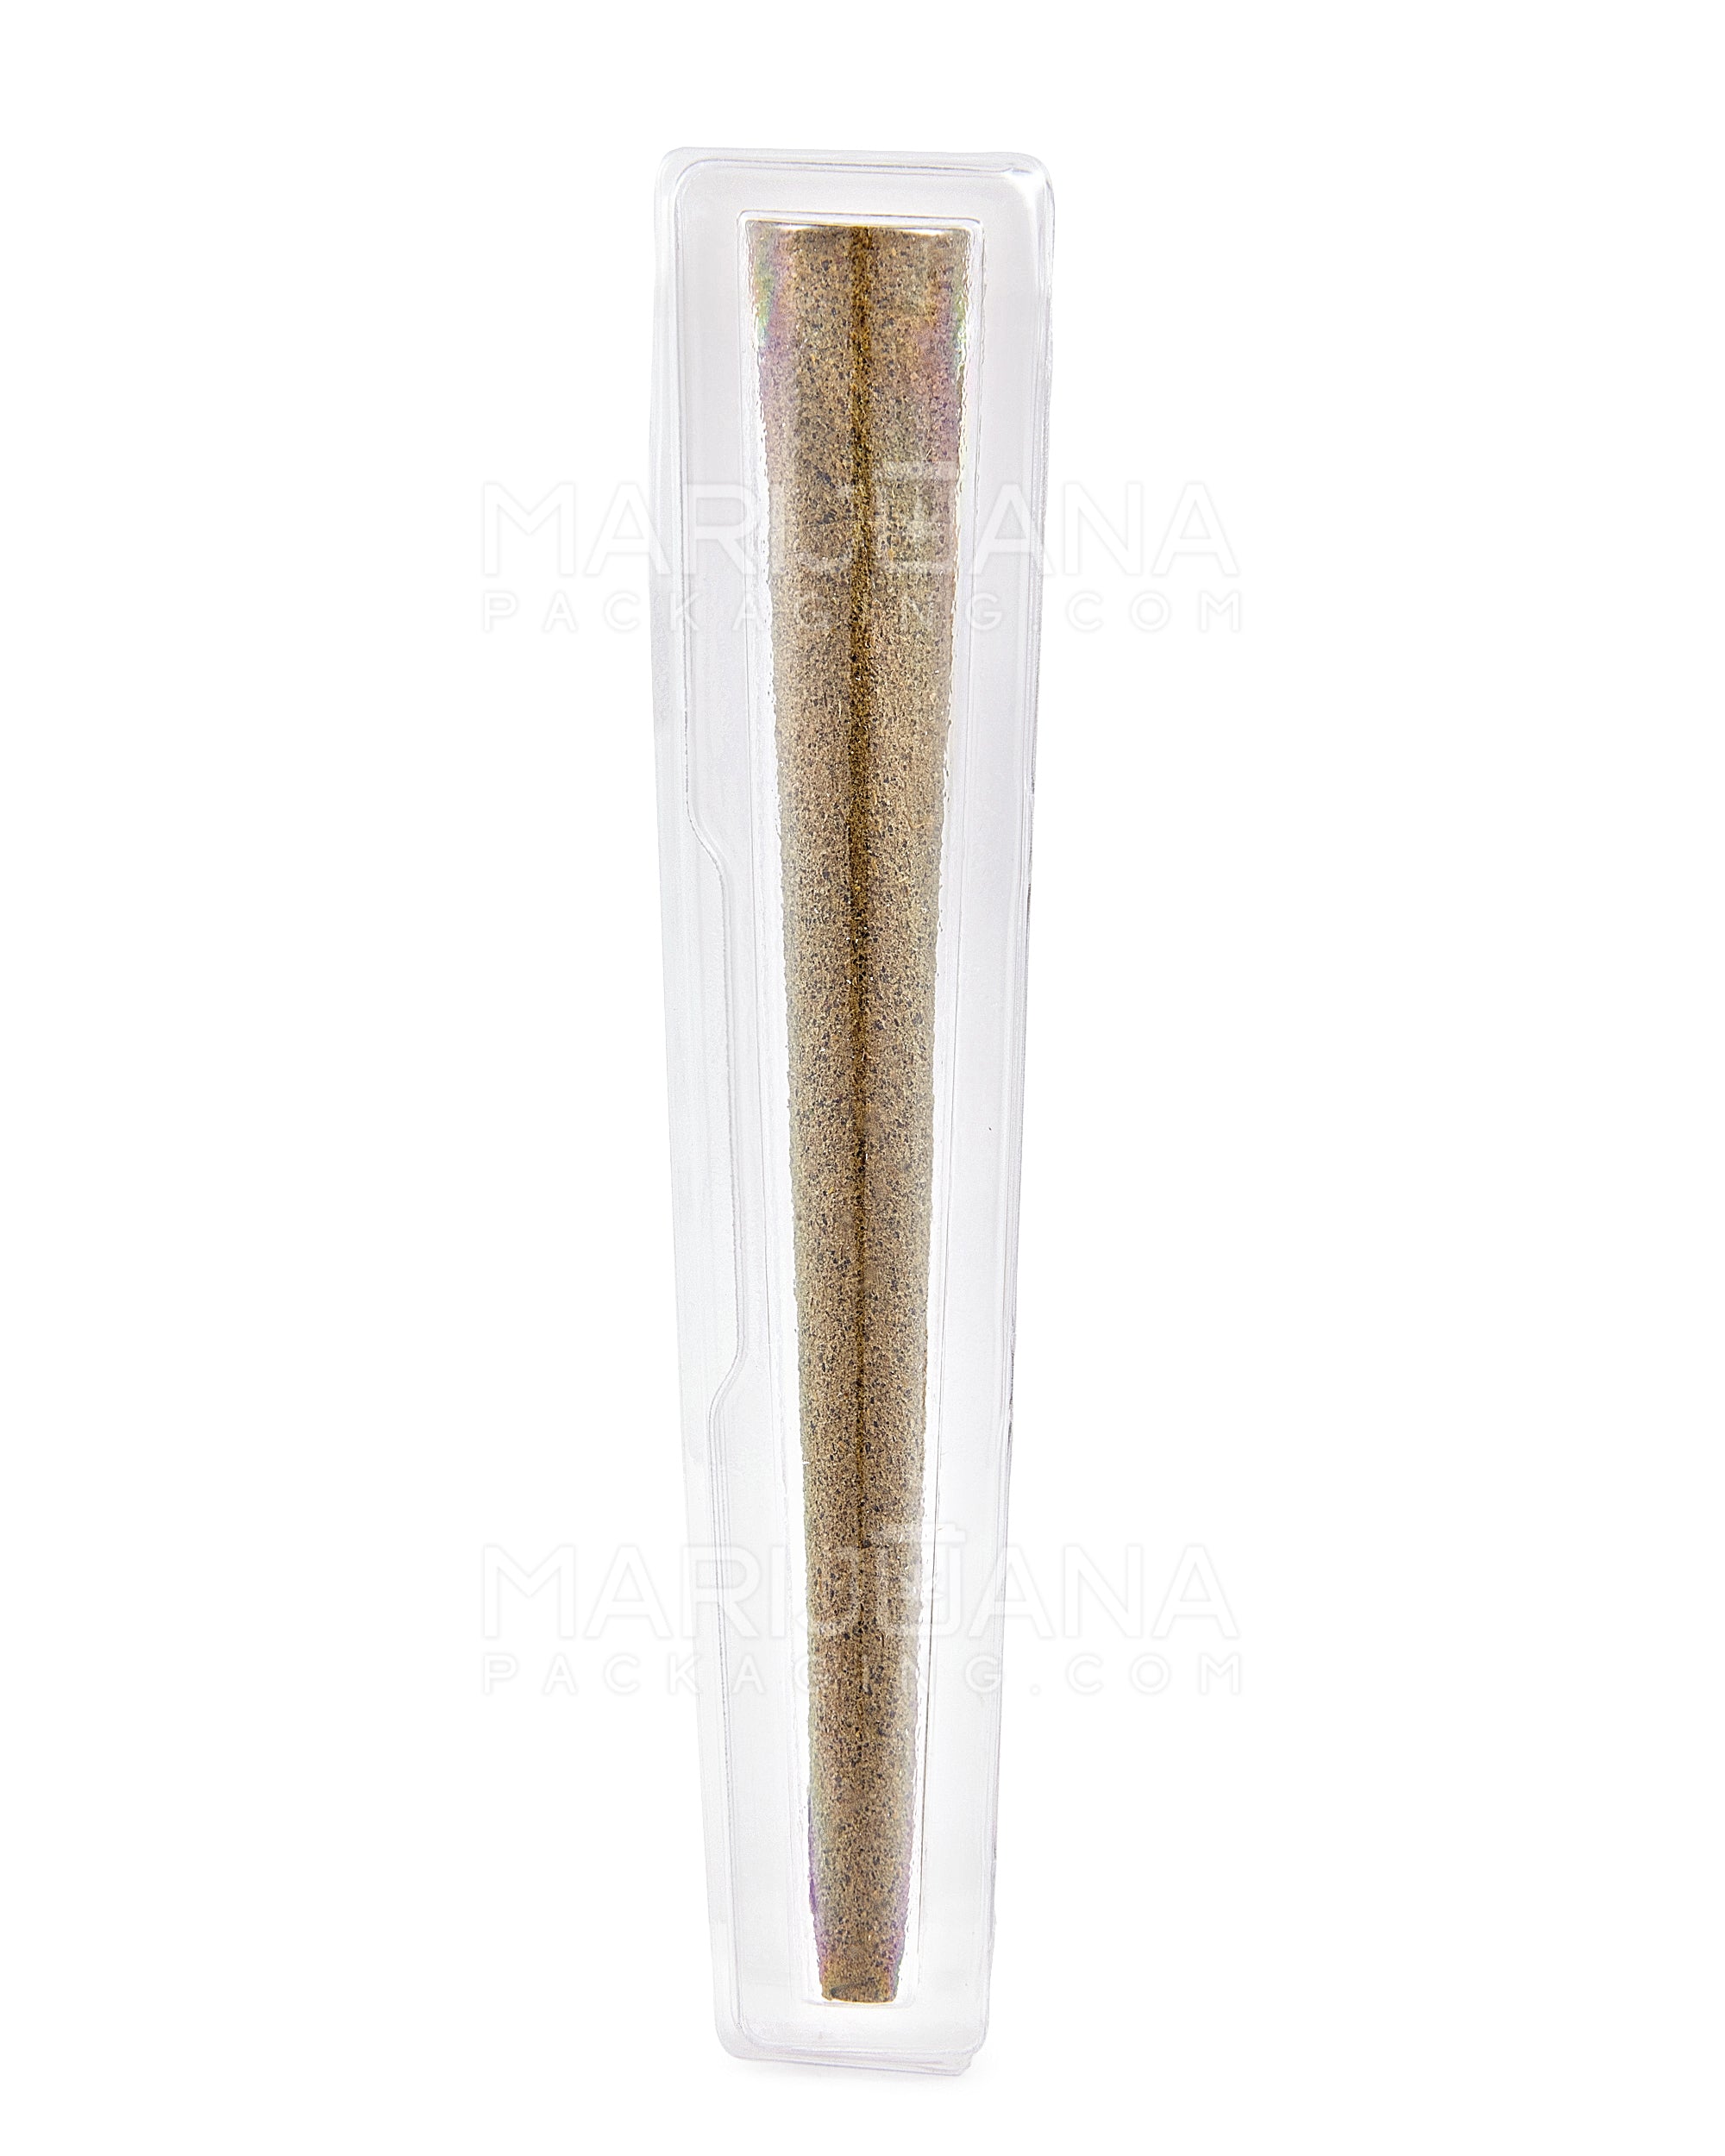 KUSH | 'Retail Display' Ultra Herbal Hemp Conical Wraps | 157mm - Sweet - 15 Count - 5